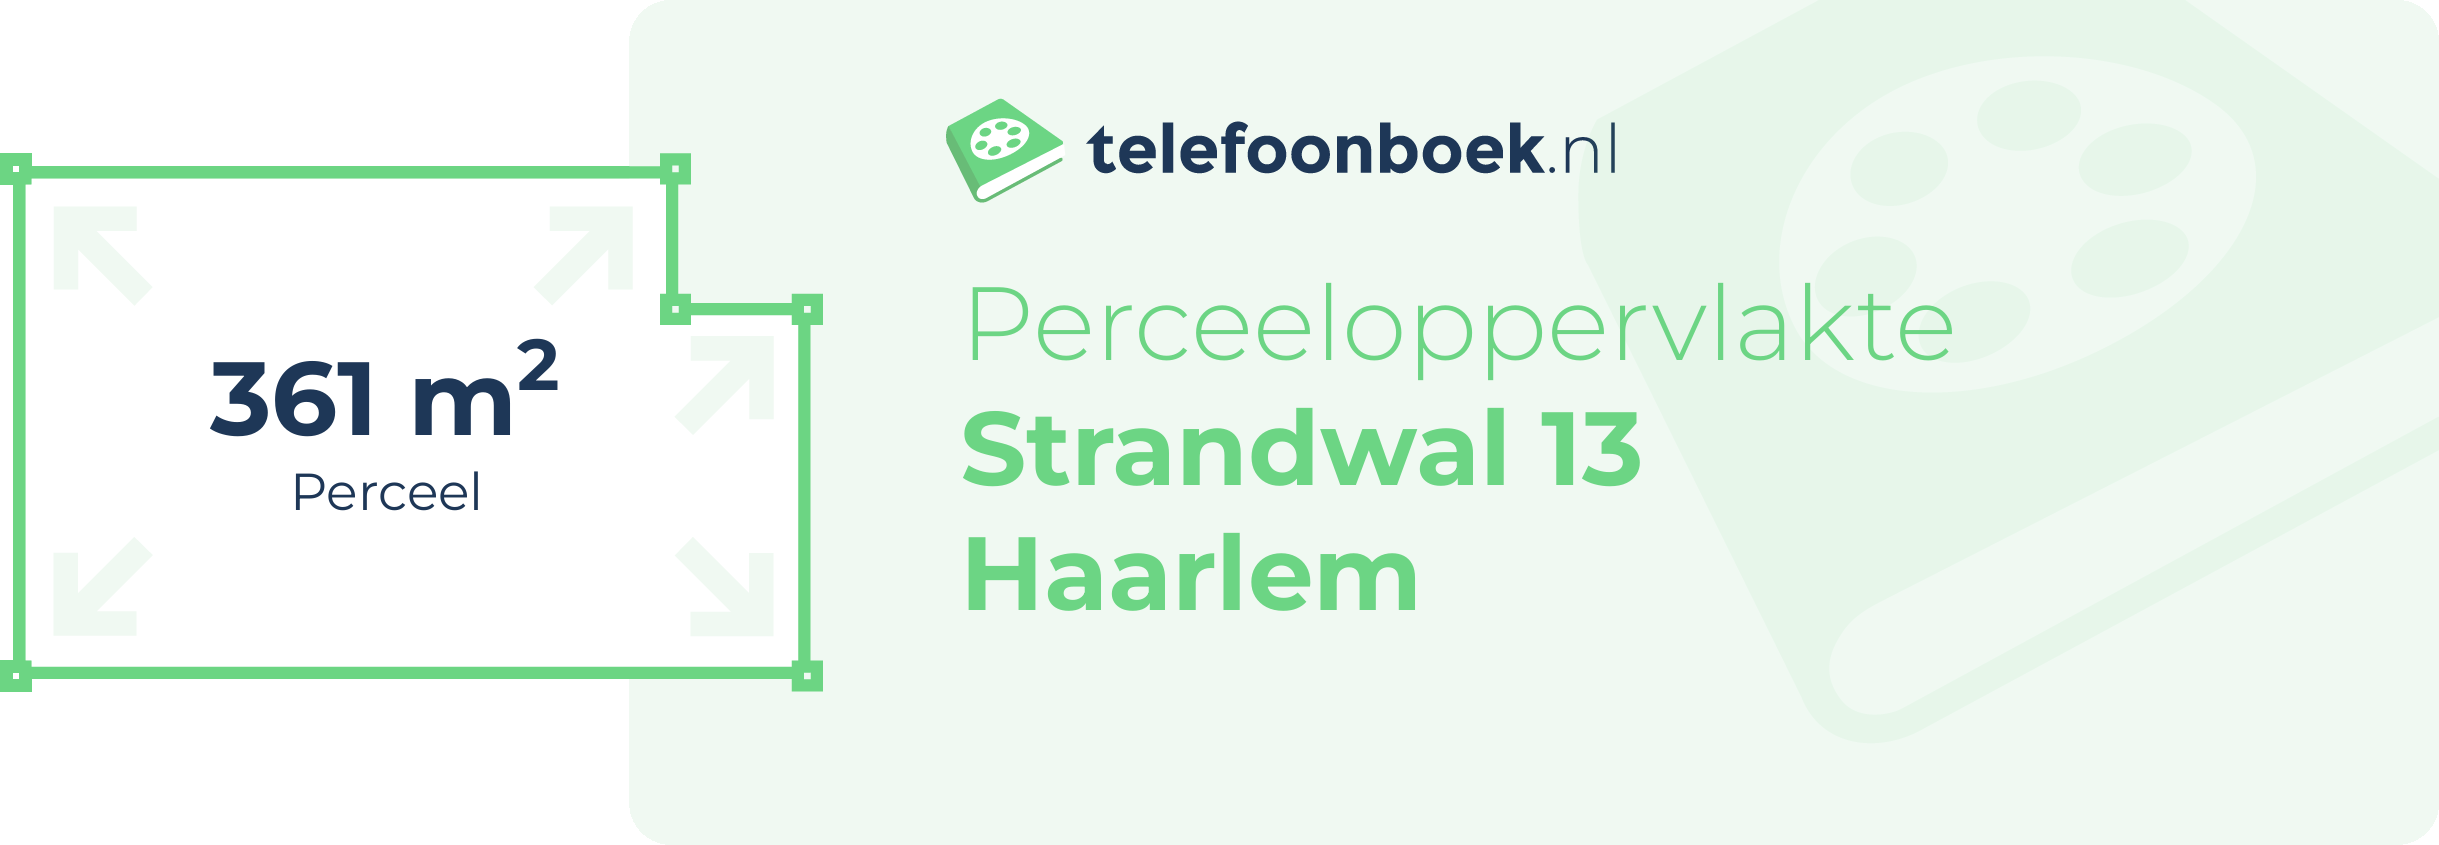 Perceeloppervlakte Strandwal 13 Haarlem